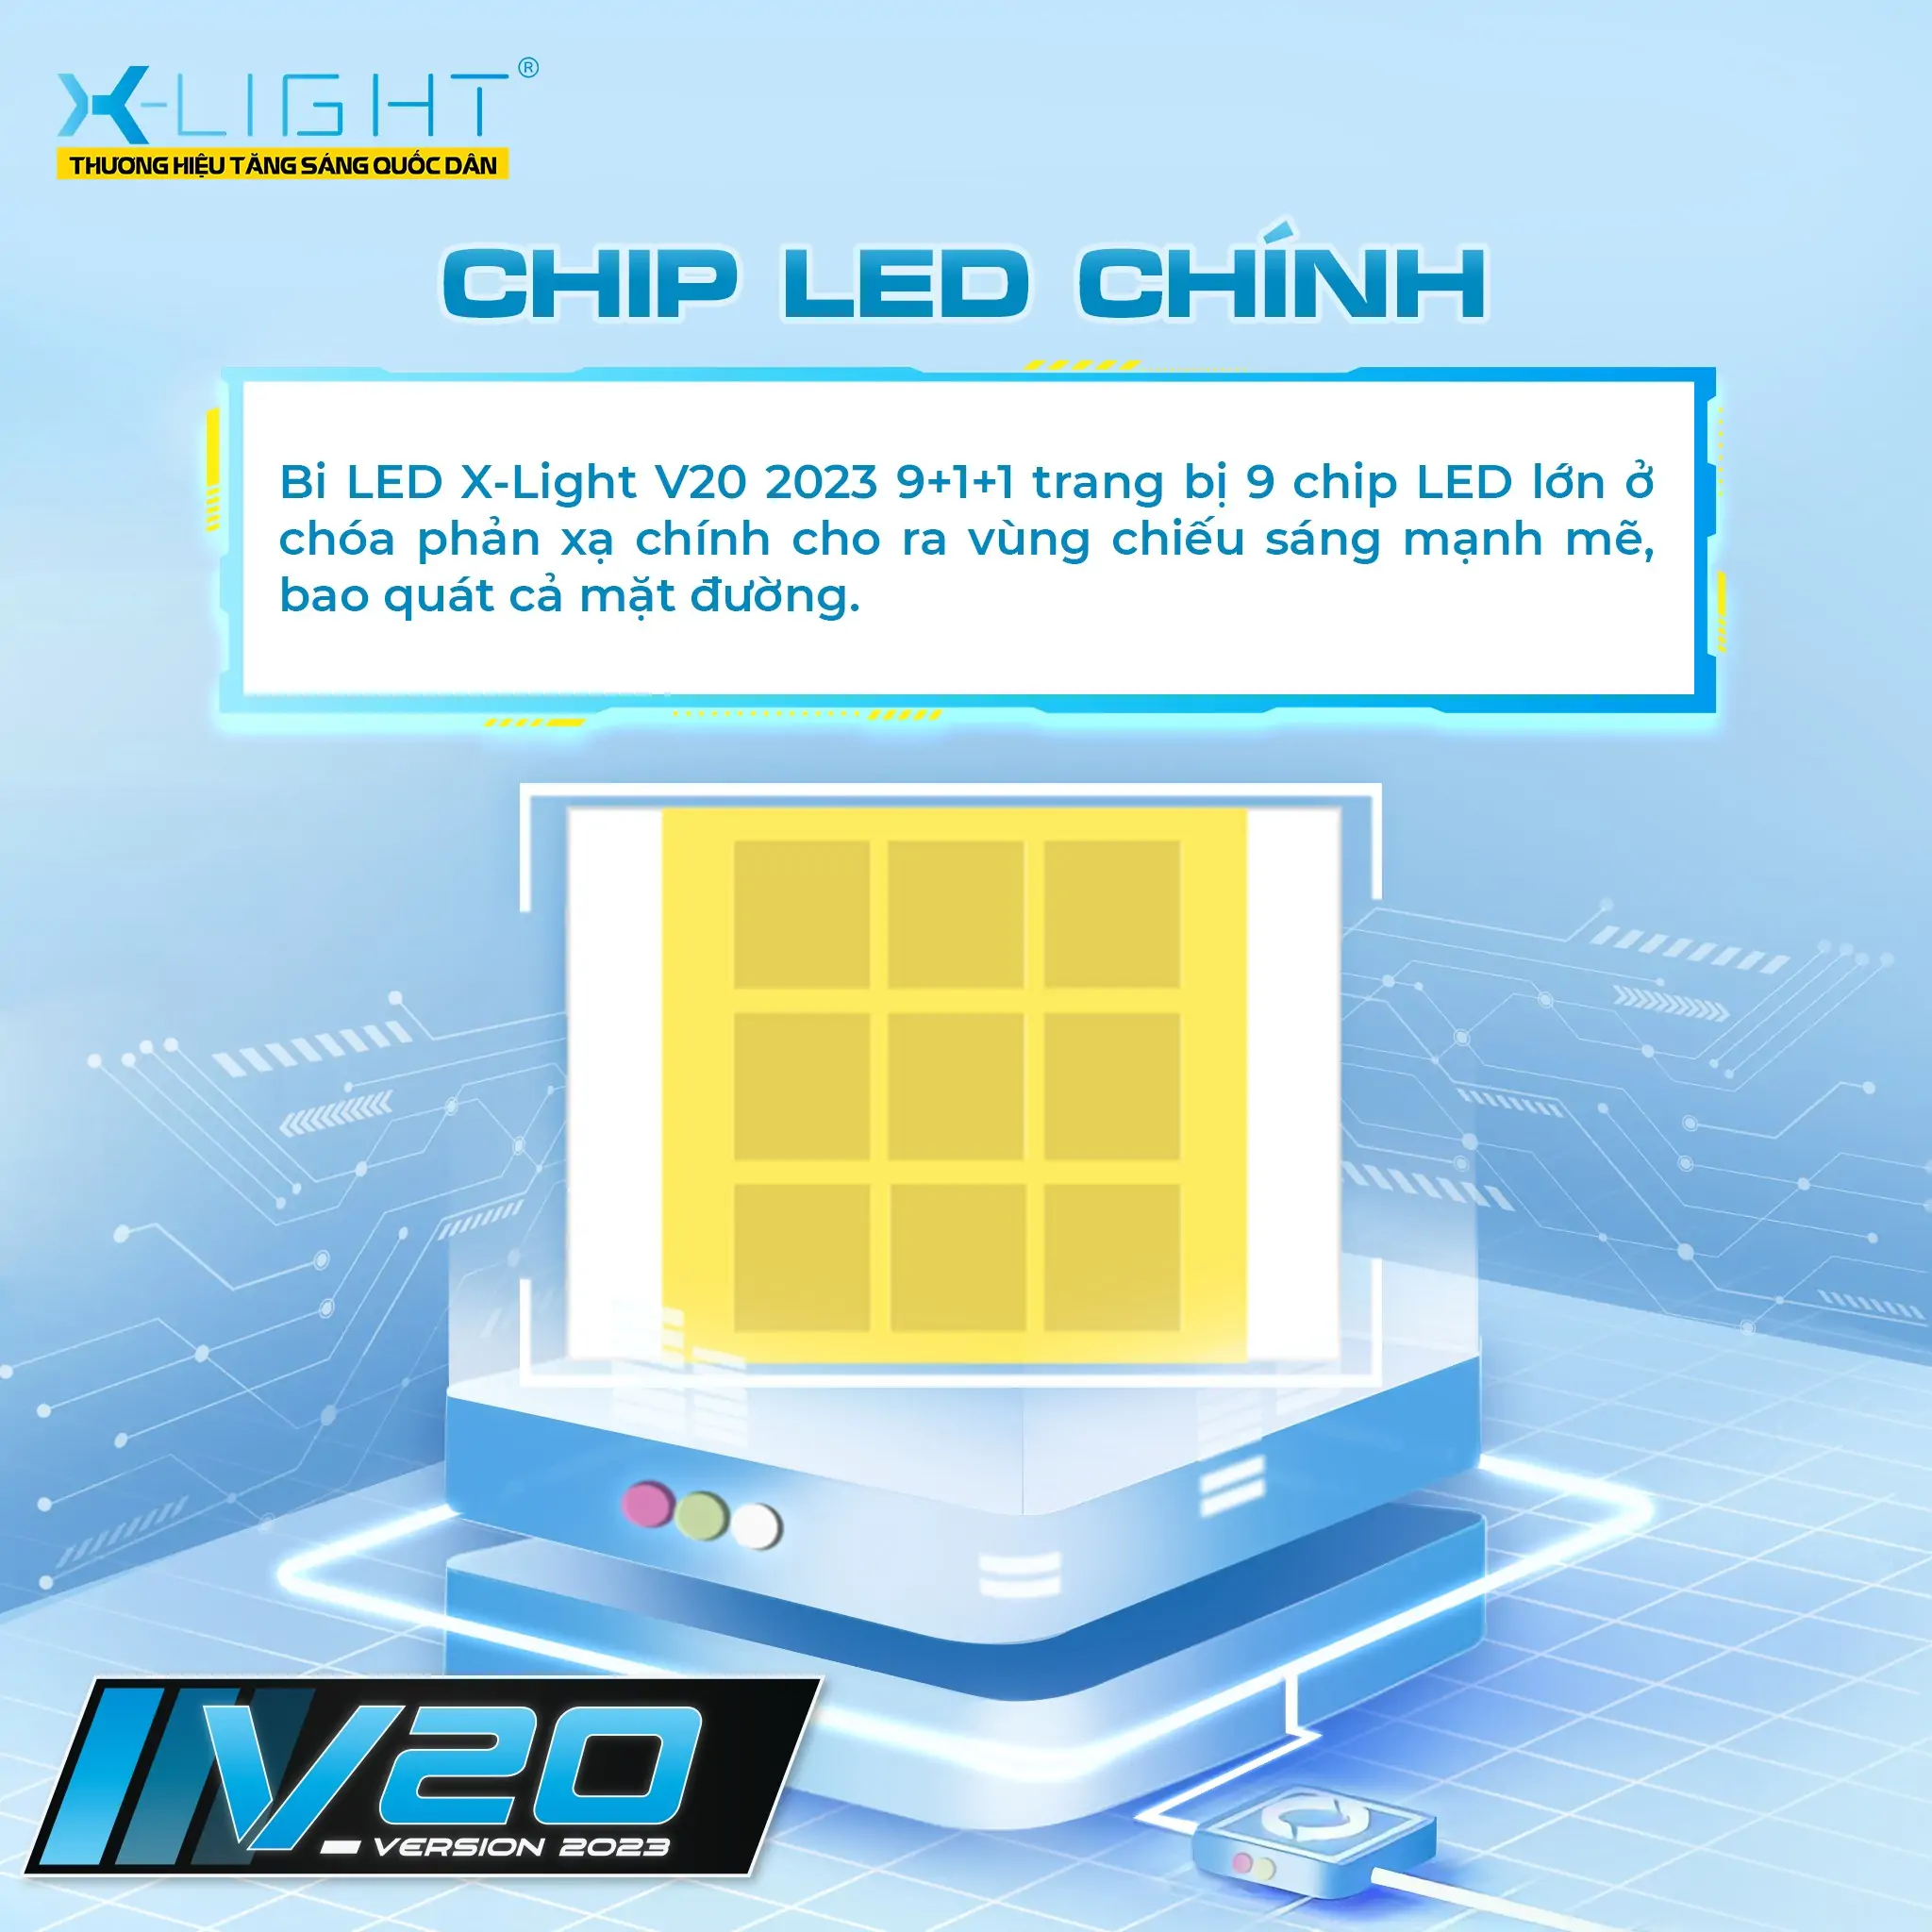 chip led chinh bi led x light v20 2023 9 1 1